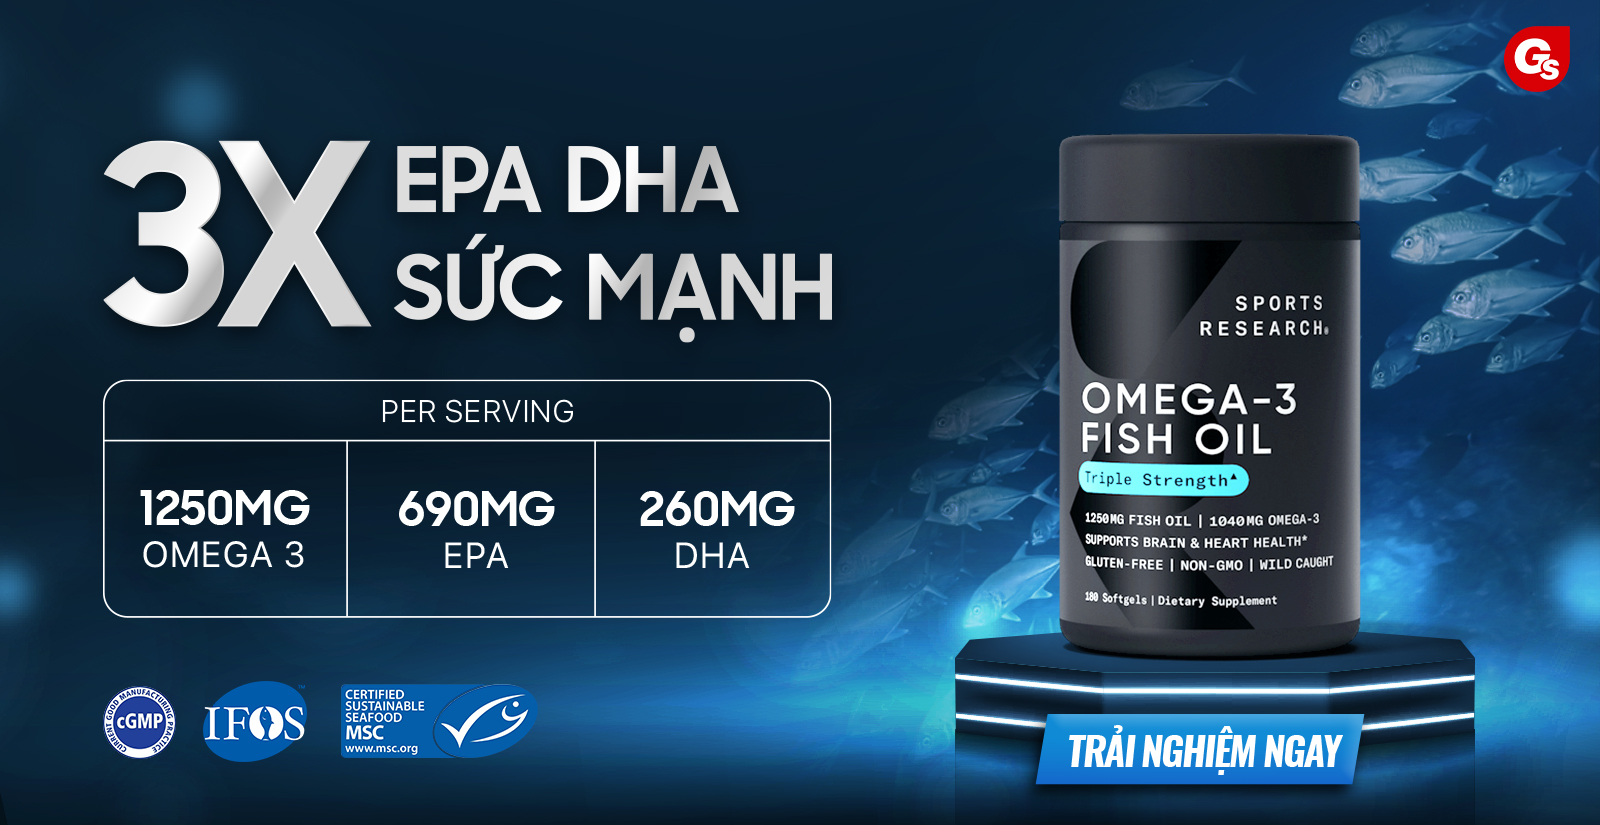 sports-omega3-fish-oil